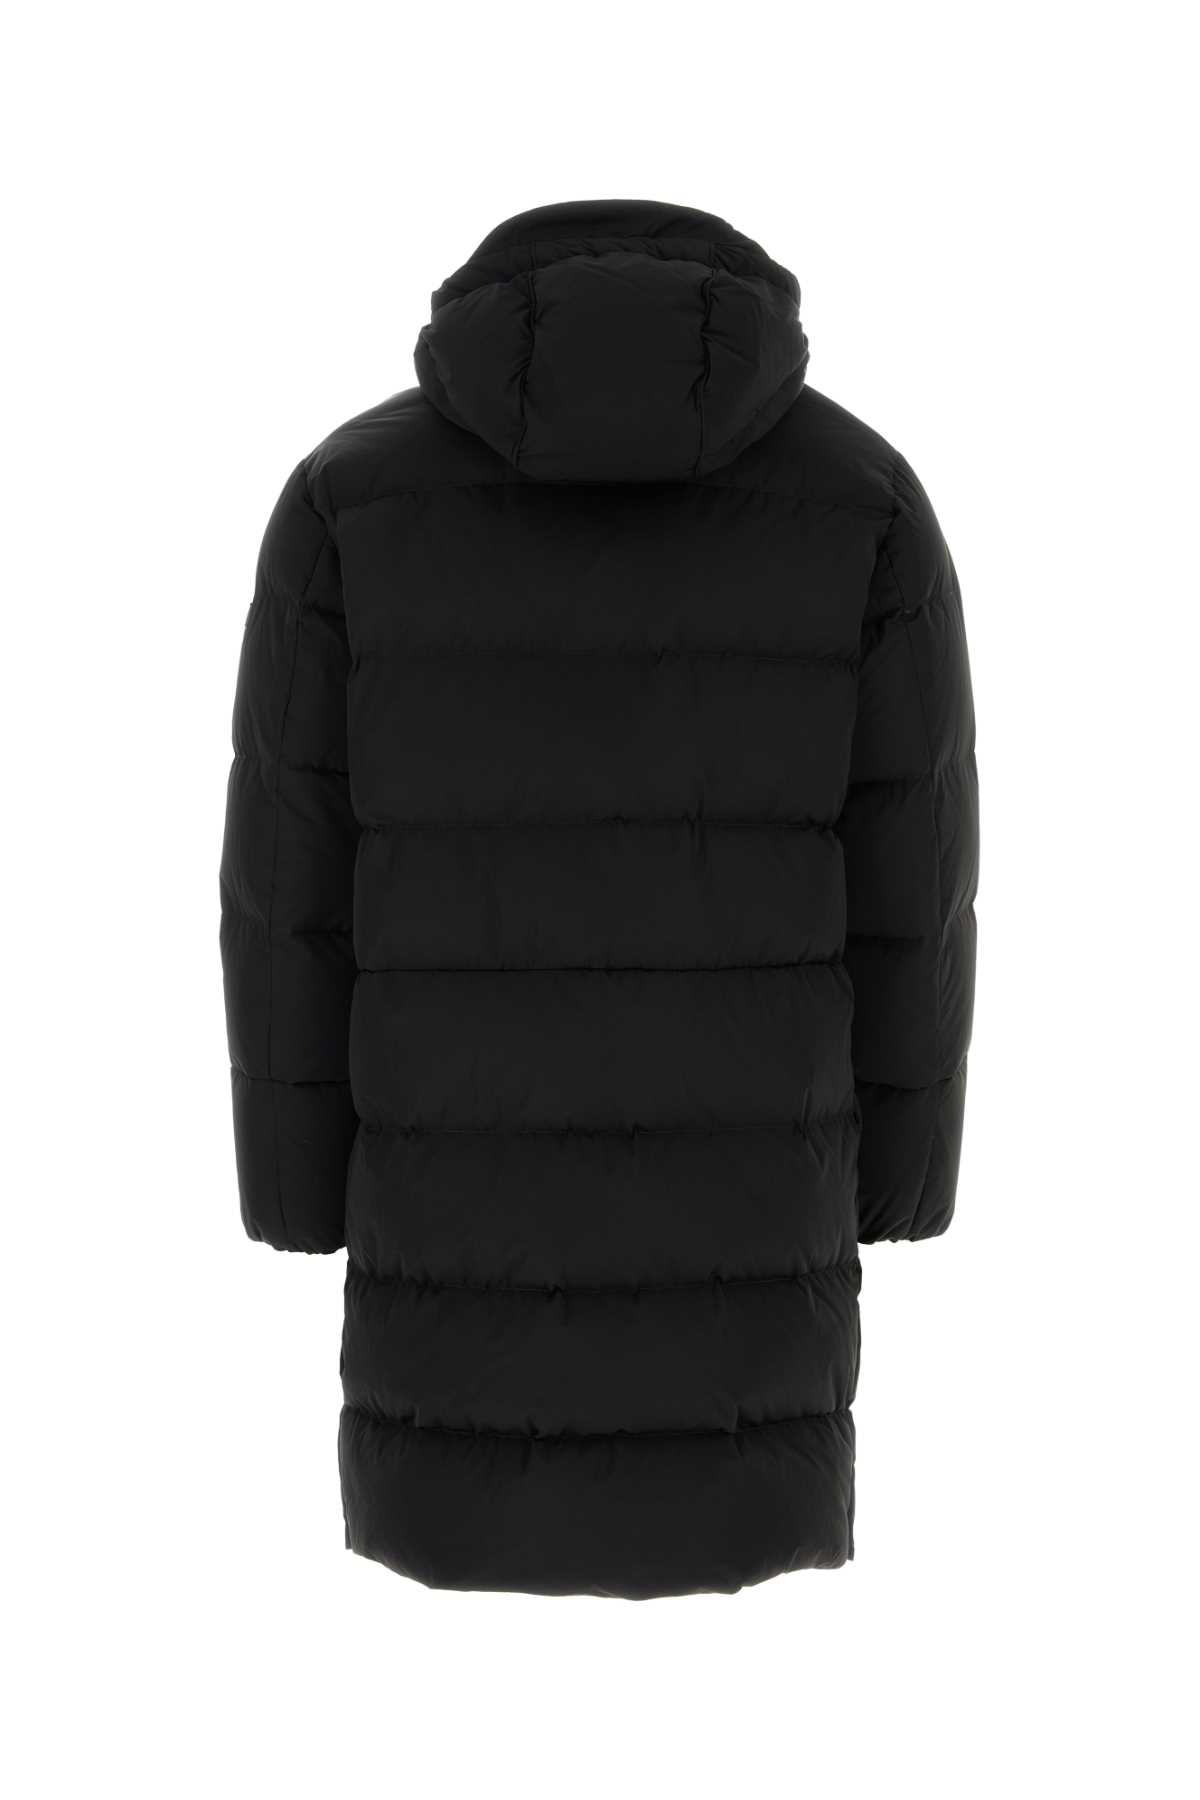 Shop Tatras Black Polyester Down Jacket